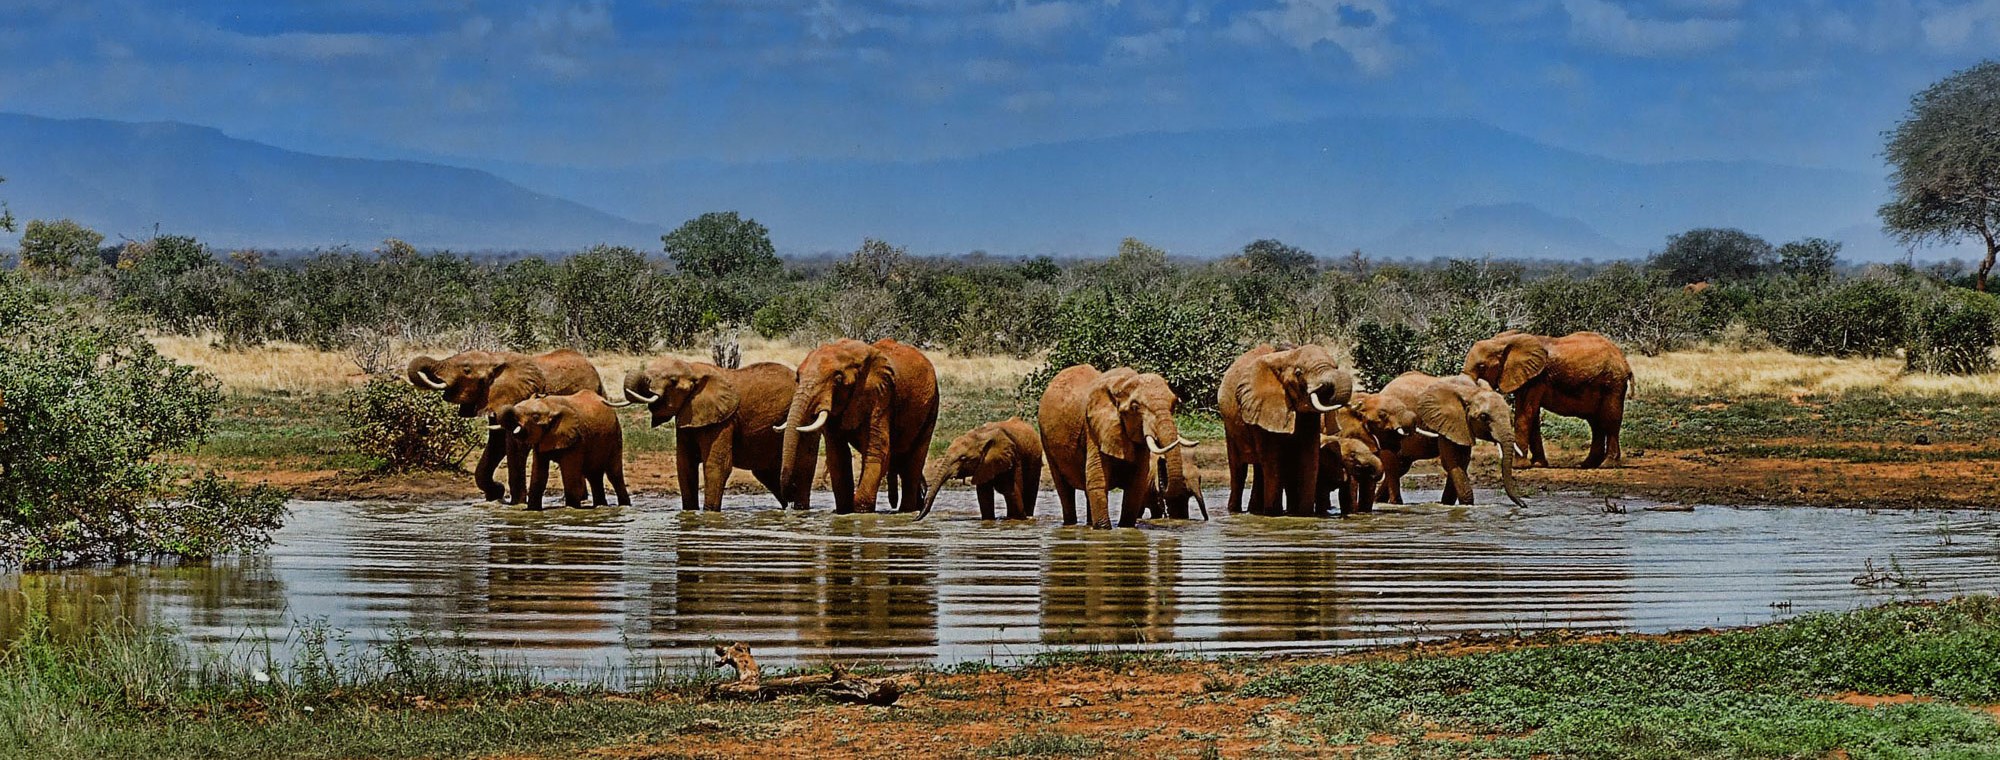 South Africa safari tours with bush elephants